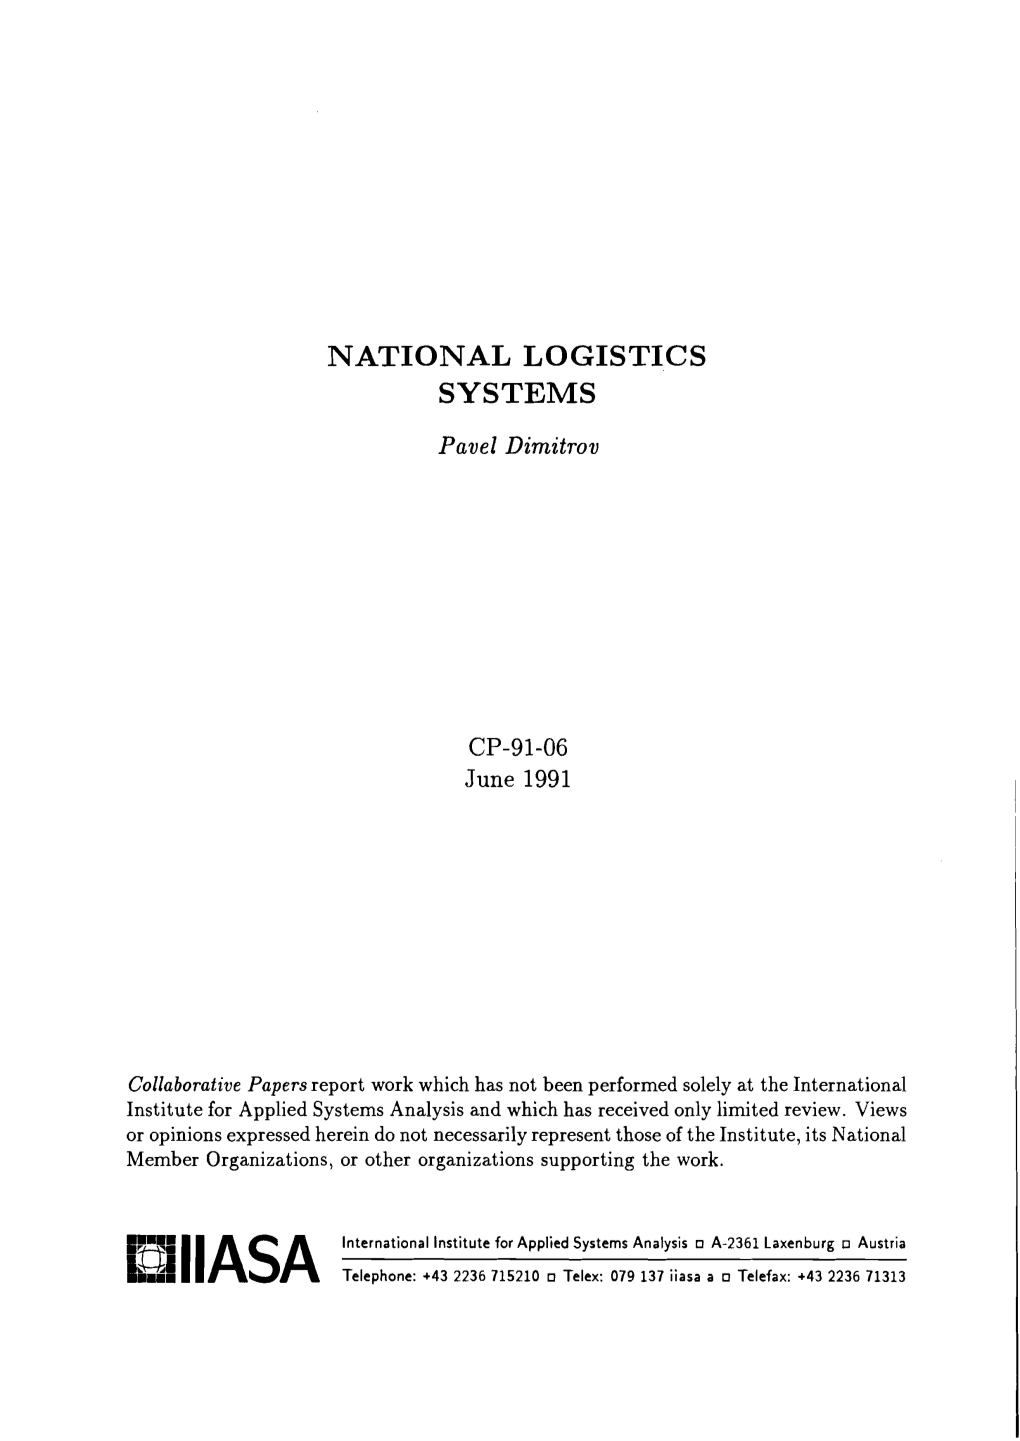 National Logistics Systems